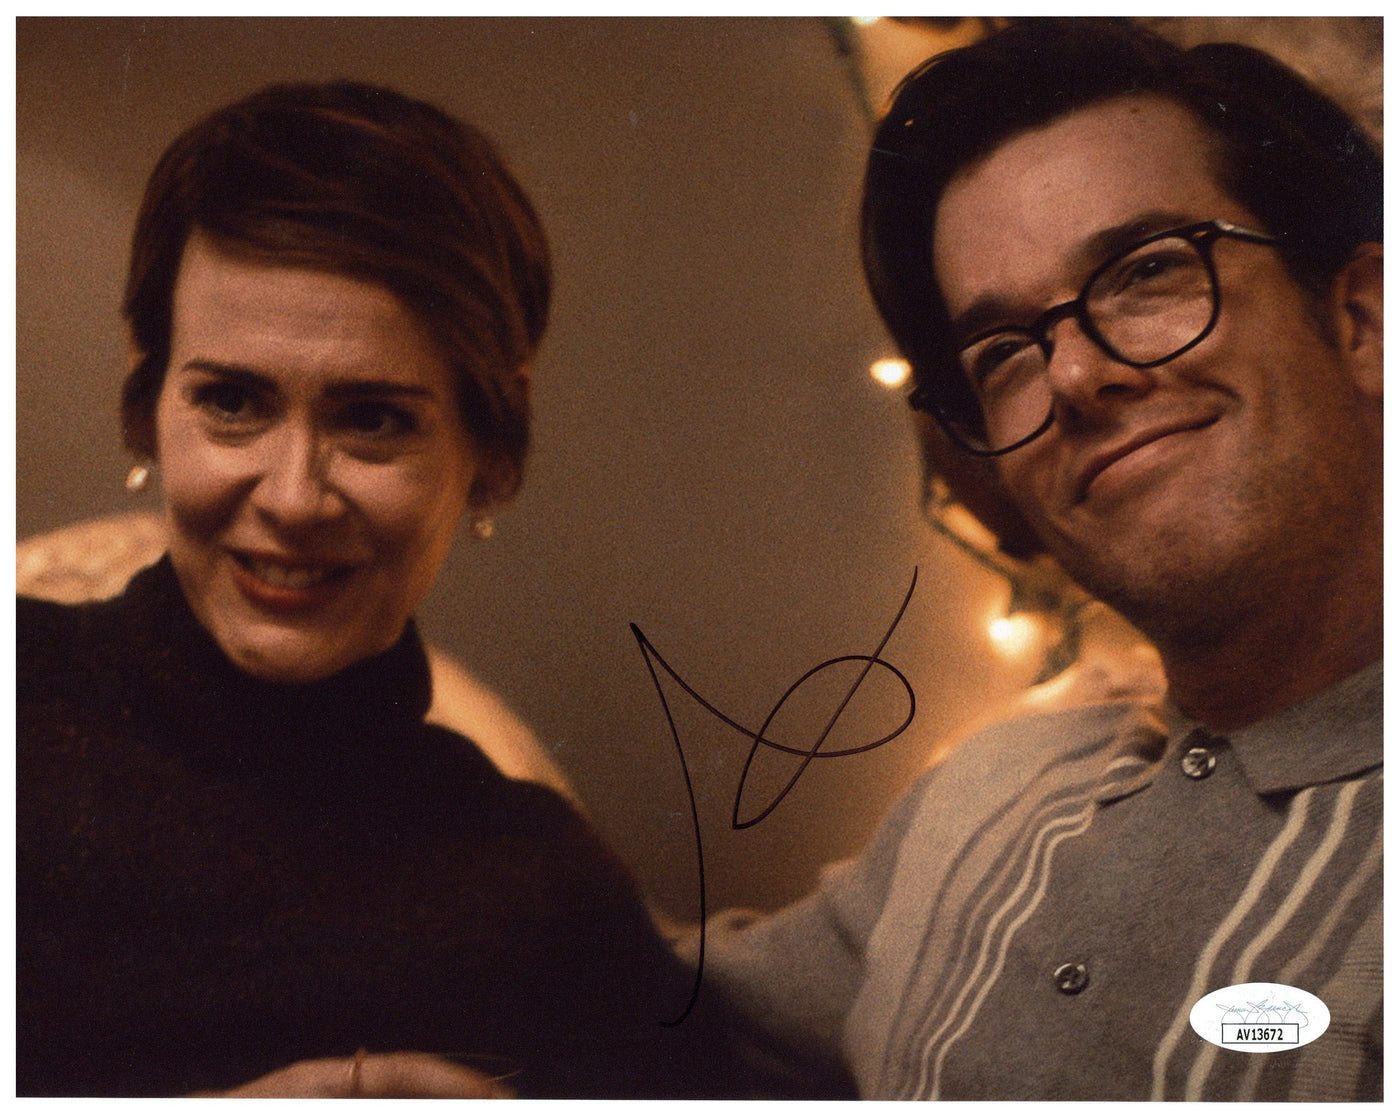 Sarah Paulson Signed 8x10 Photo Authentic THE BEAR Autographed JSA COA